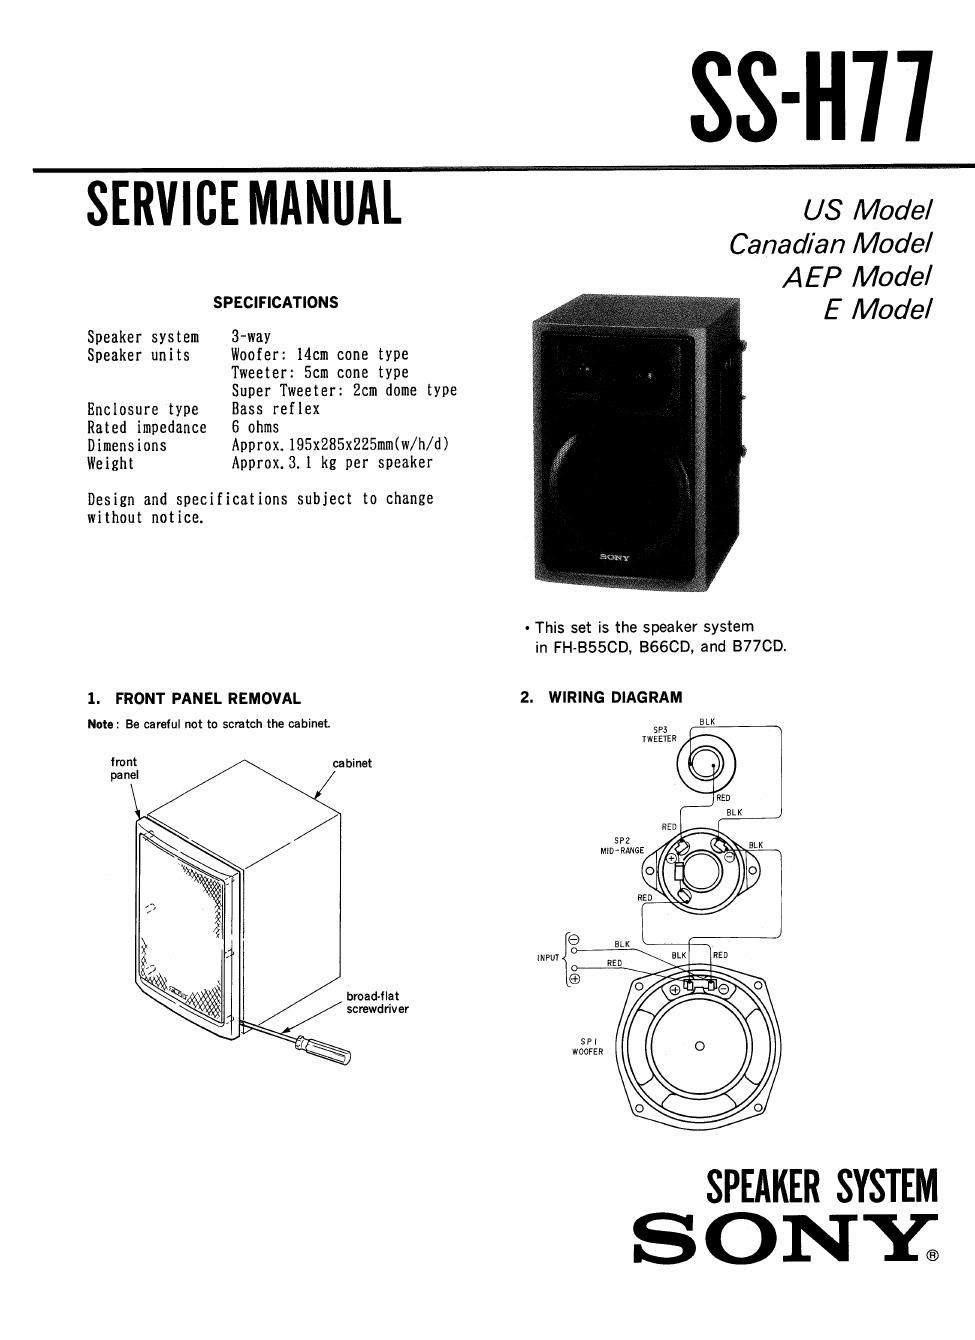 sony ss h 77 service manual